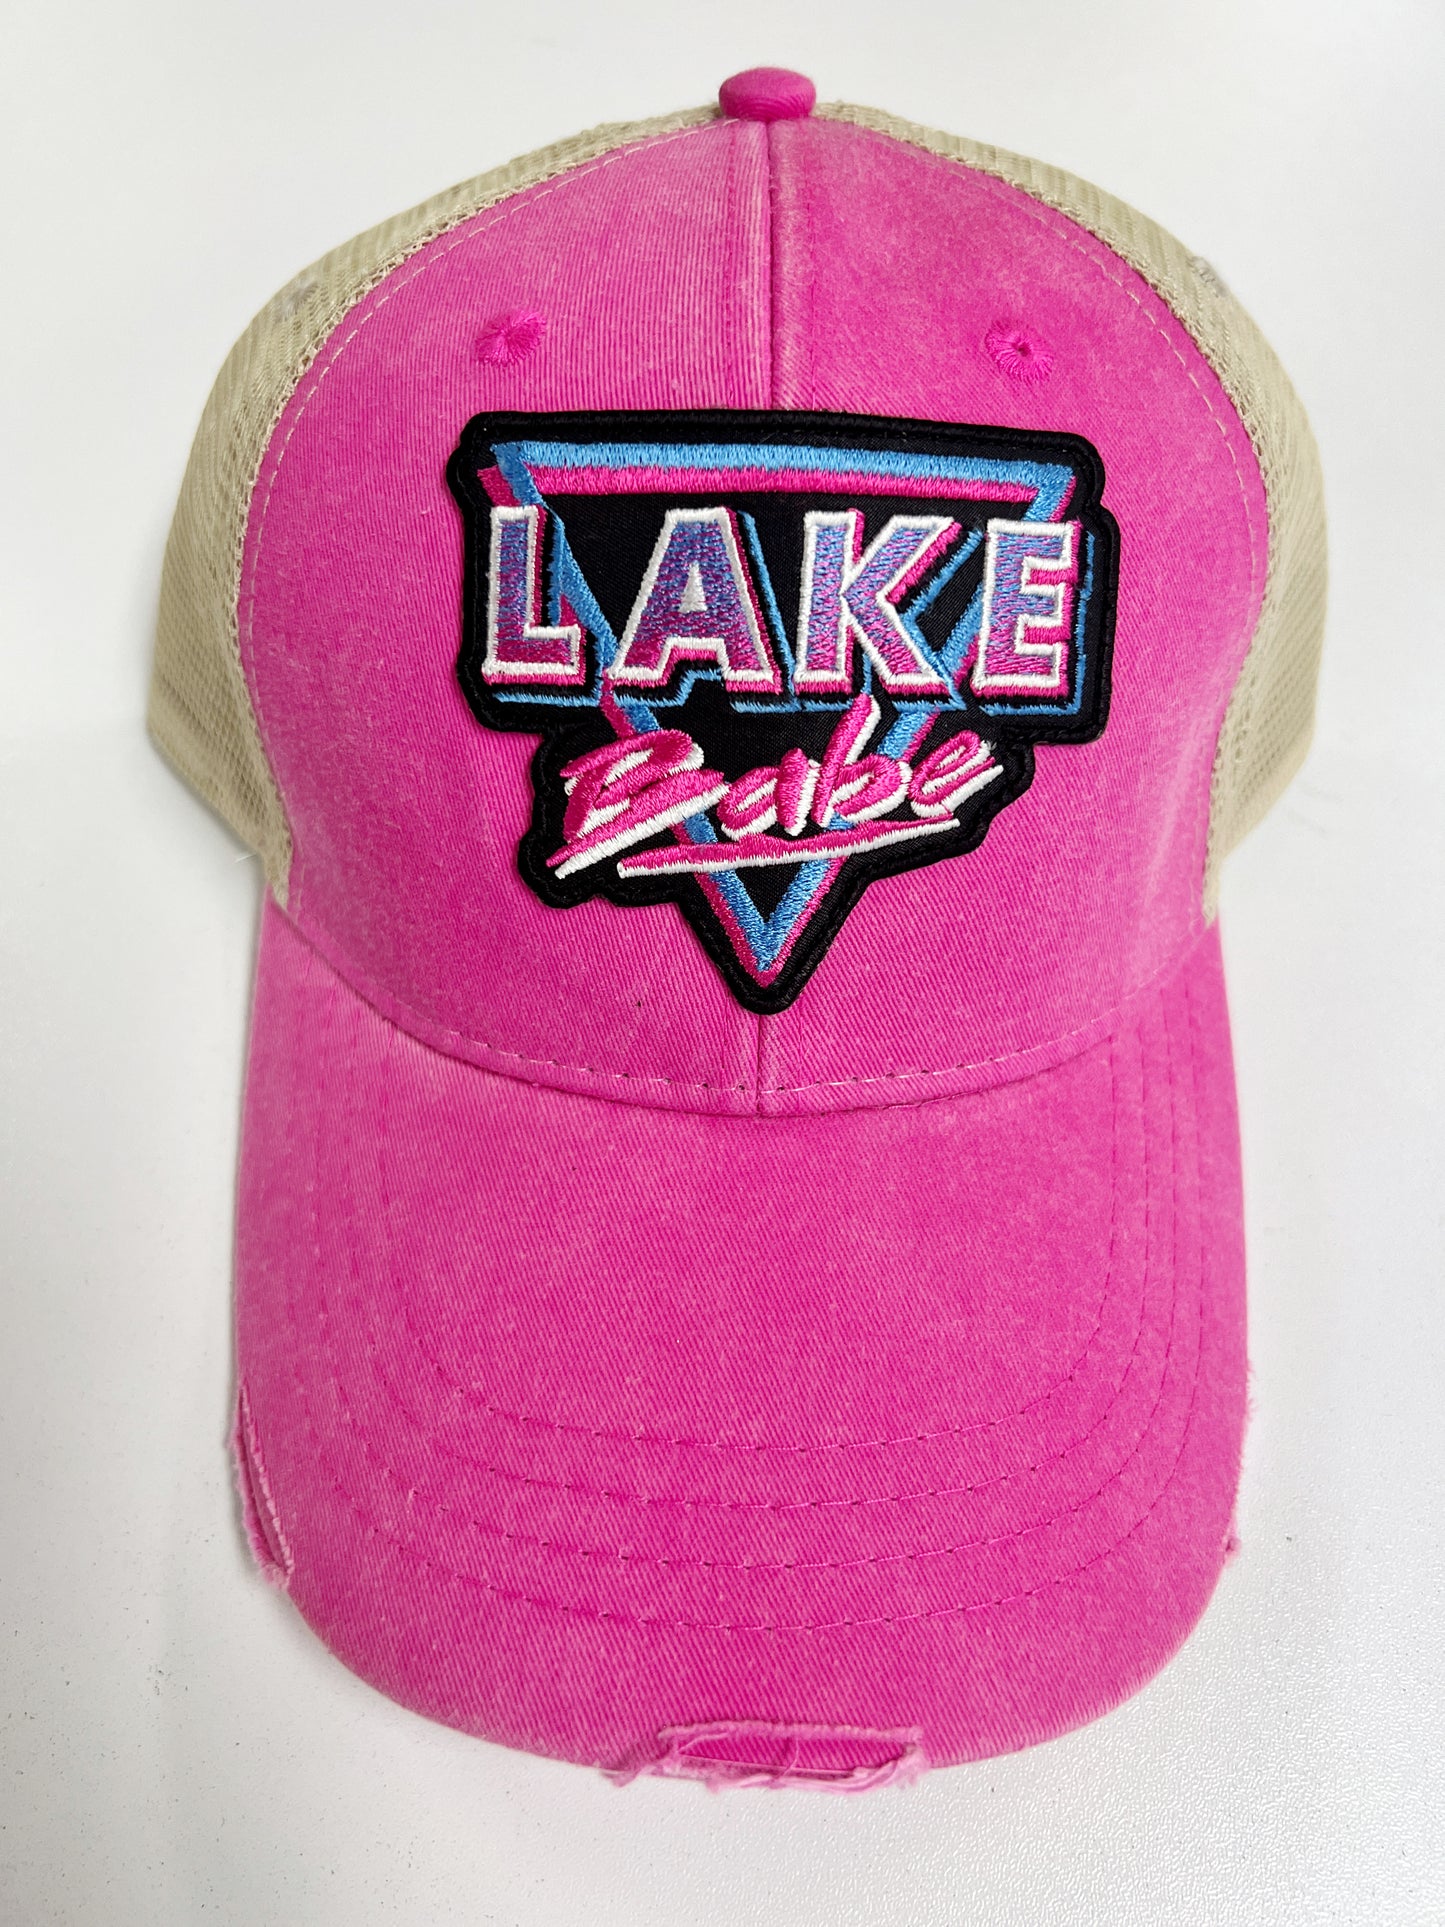 Lake Babe Trucker Hat